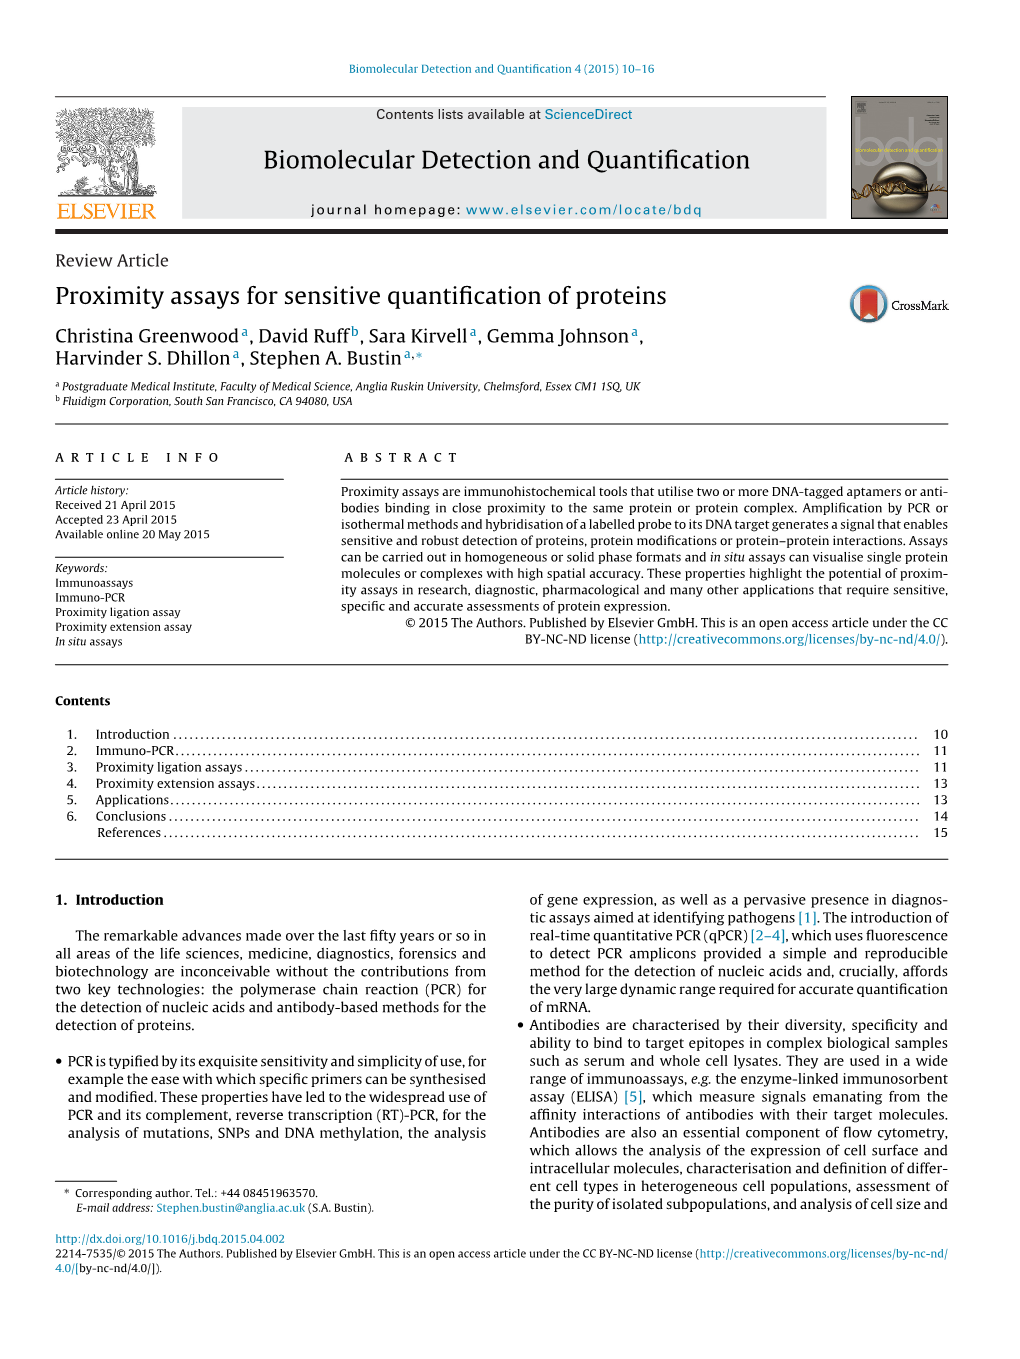 Proximity Assays for Sensitive Quantification of Proteins